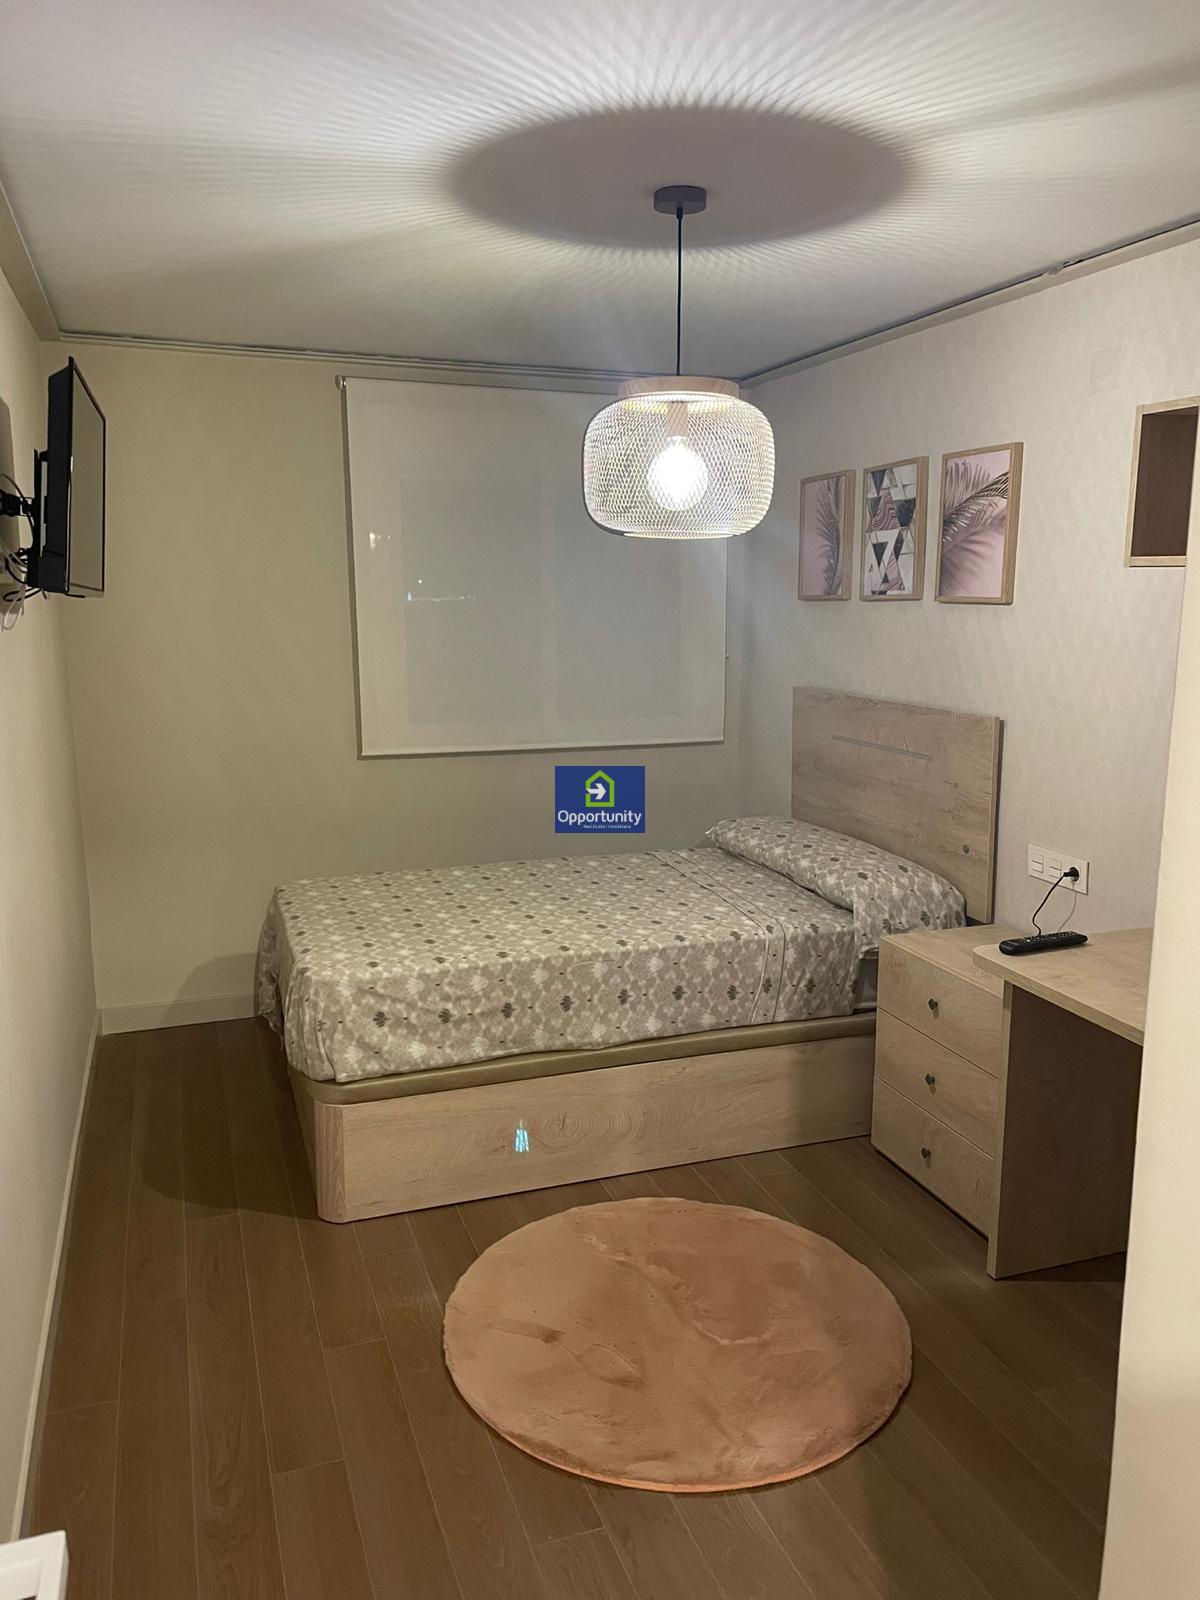 Flat for rent in Campo Verde (Granada), 800 €/month (Season)